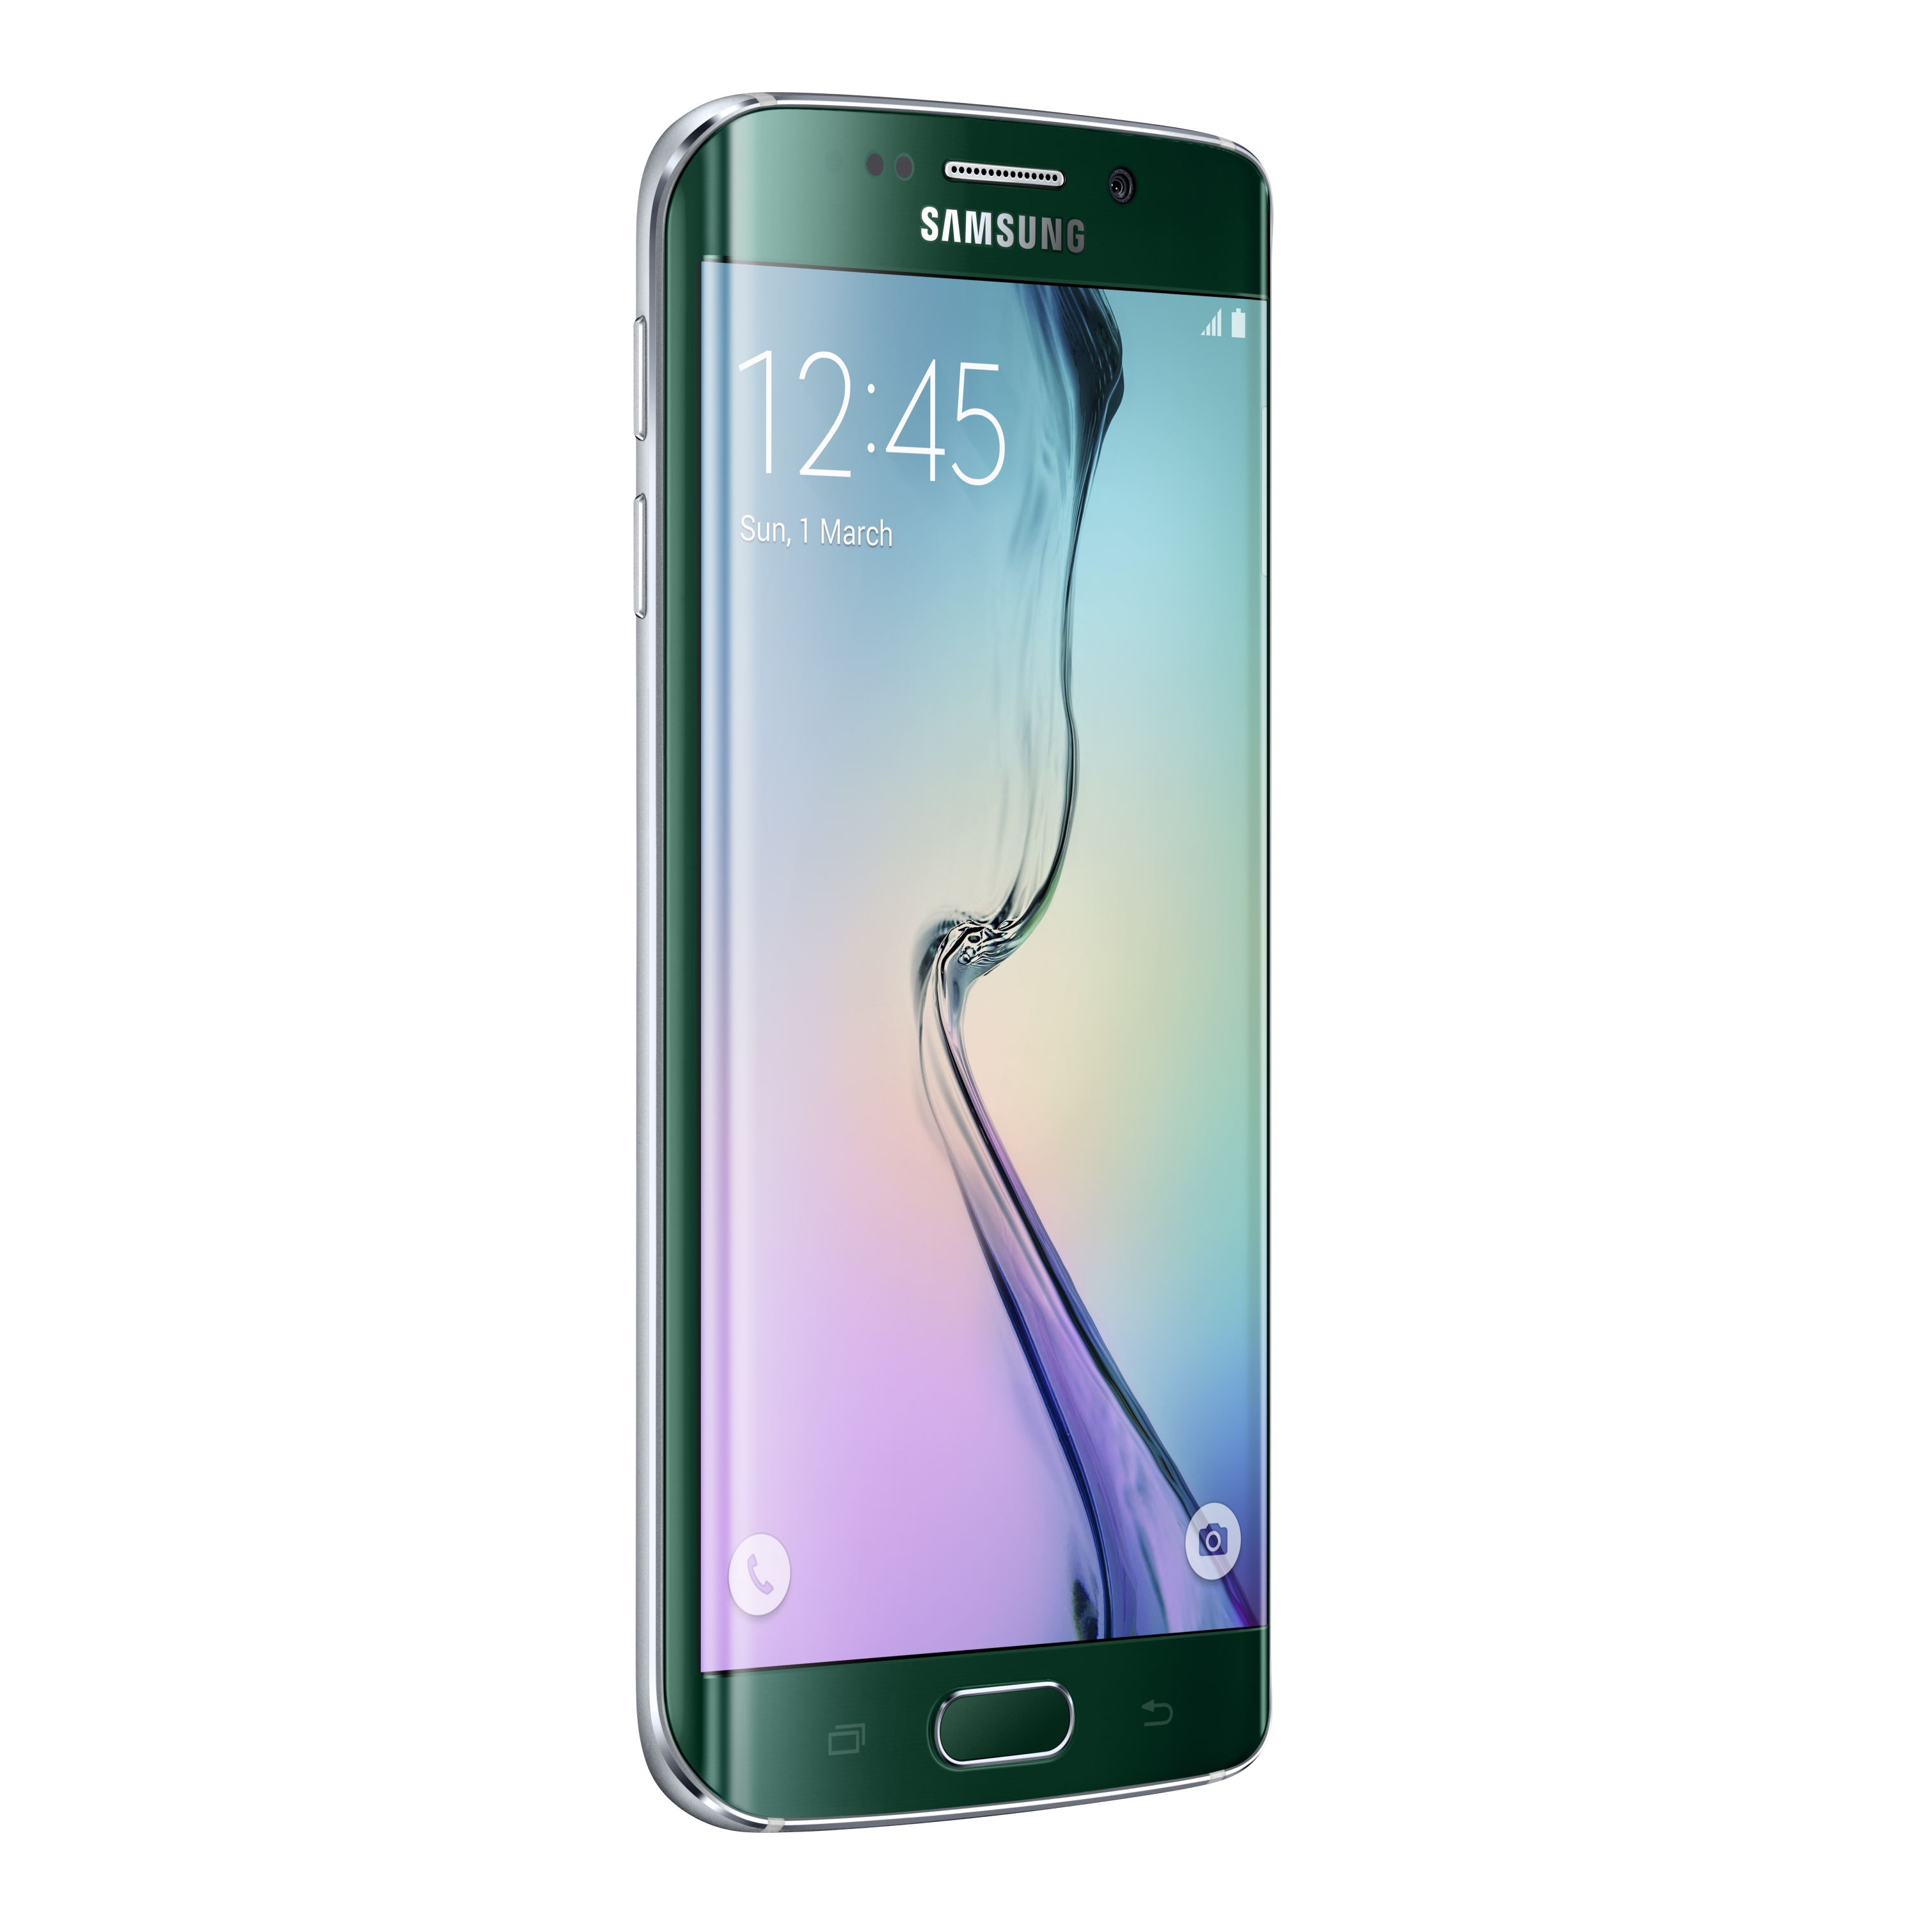 Samsung телефоны спб. Samsung g925f Galaxy s6 Edge. Samsung Galaxy (SM-g925) s6 Edge. Samsung Galaxy s6 Edge 128gb. Samsung Galaxy s6 Edge 64gb.